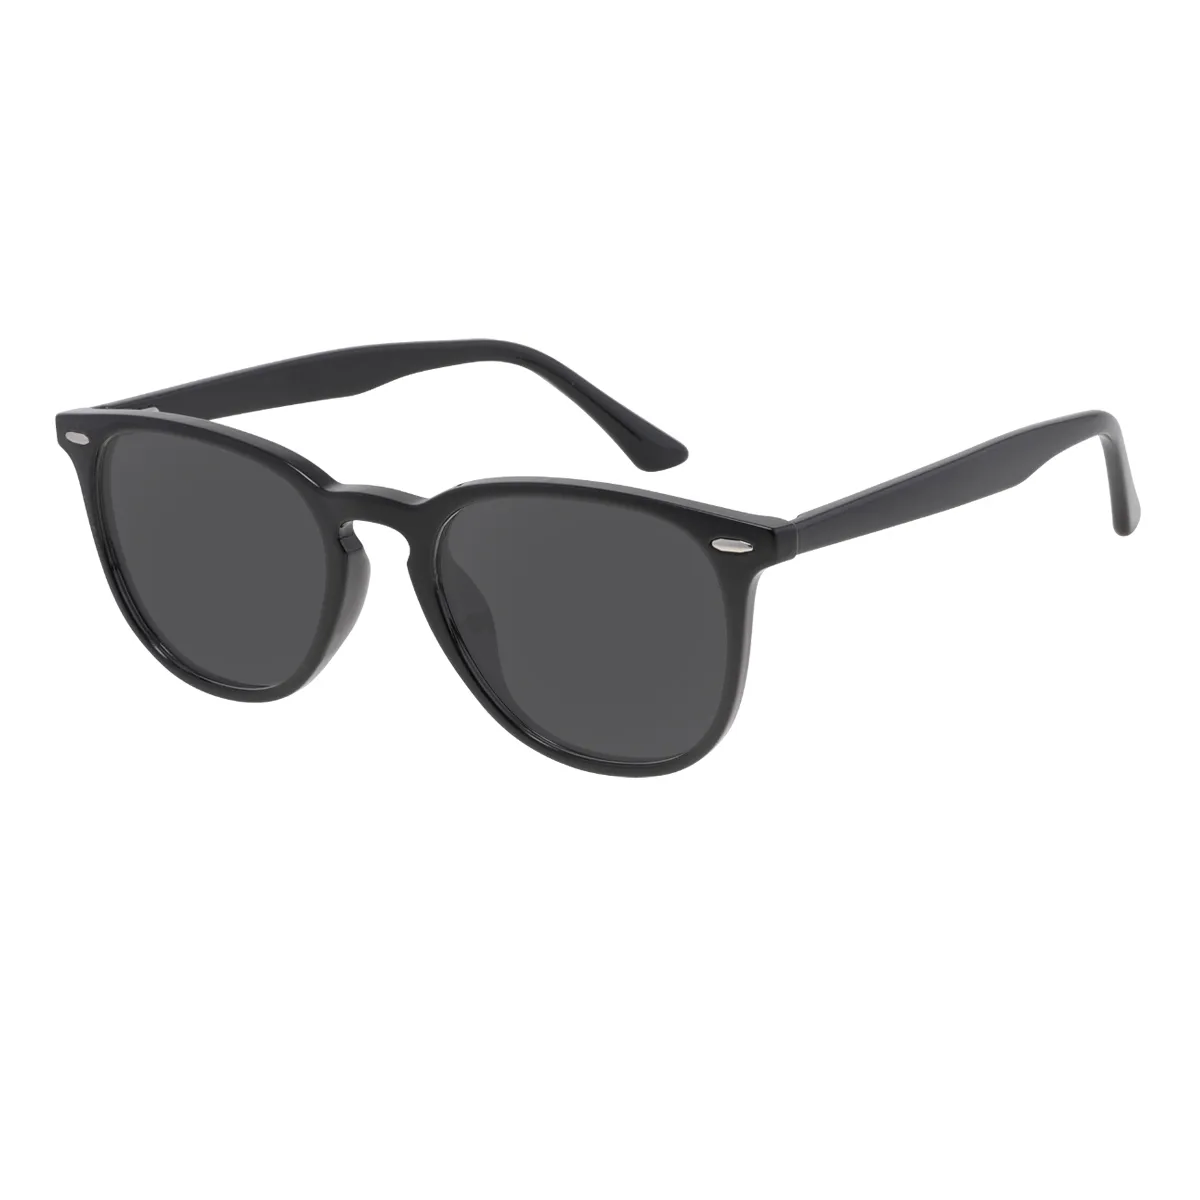 Dobbins - Square Black Sunglasses for Men & Women